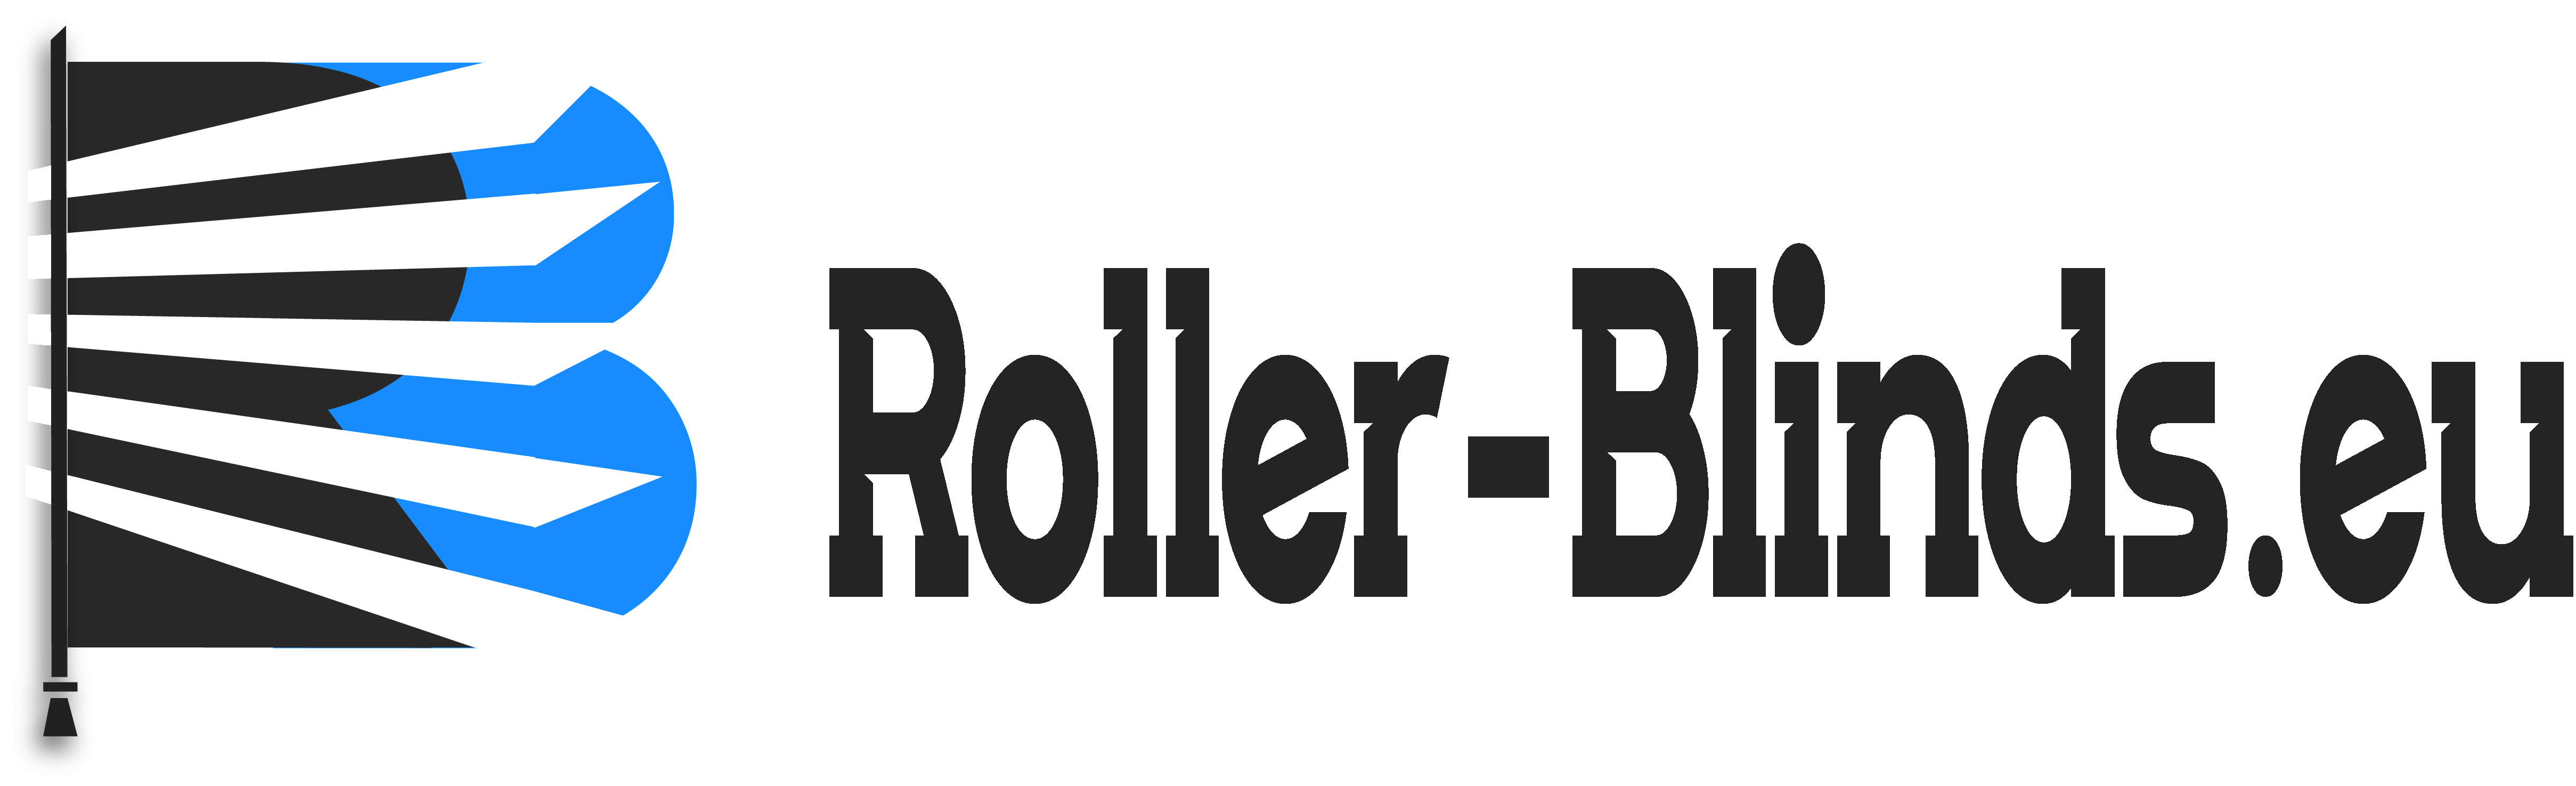 Roller-Blinds Logo